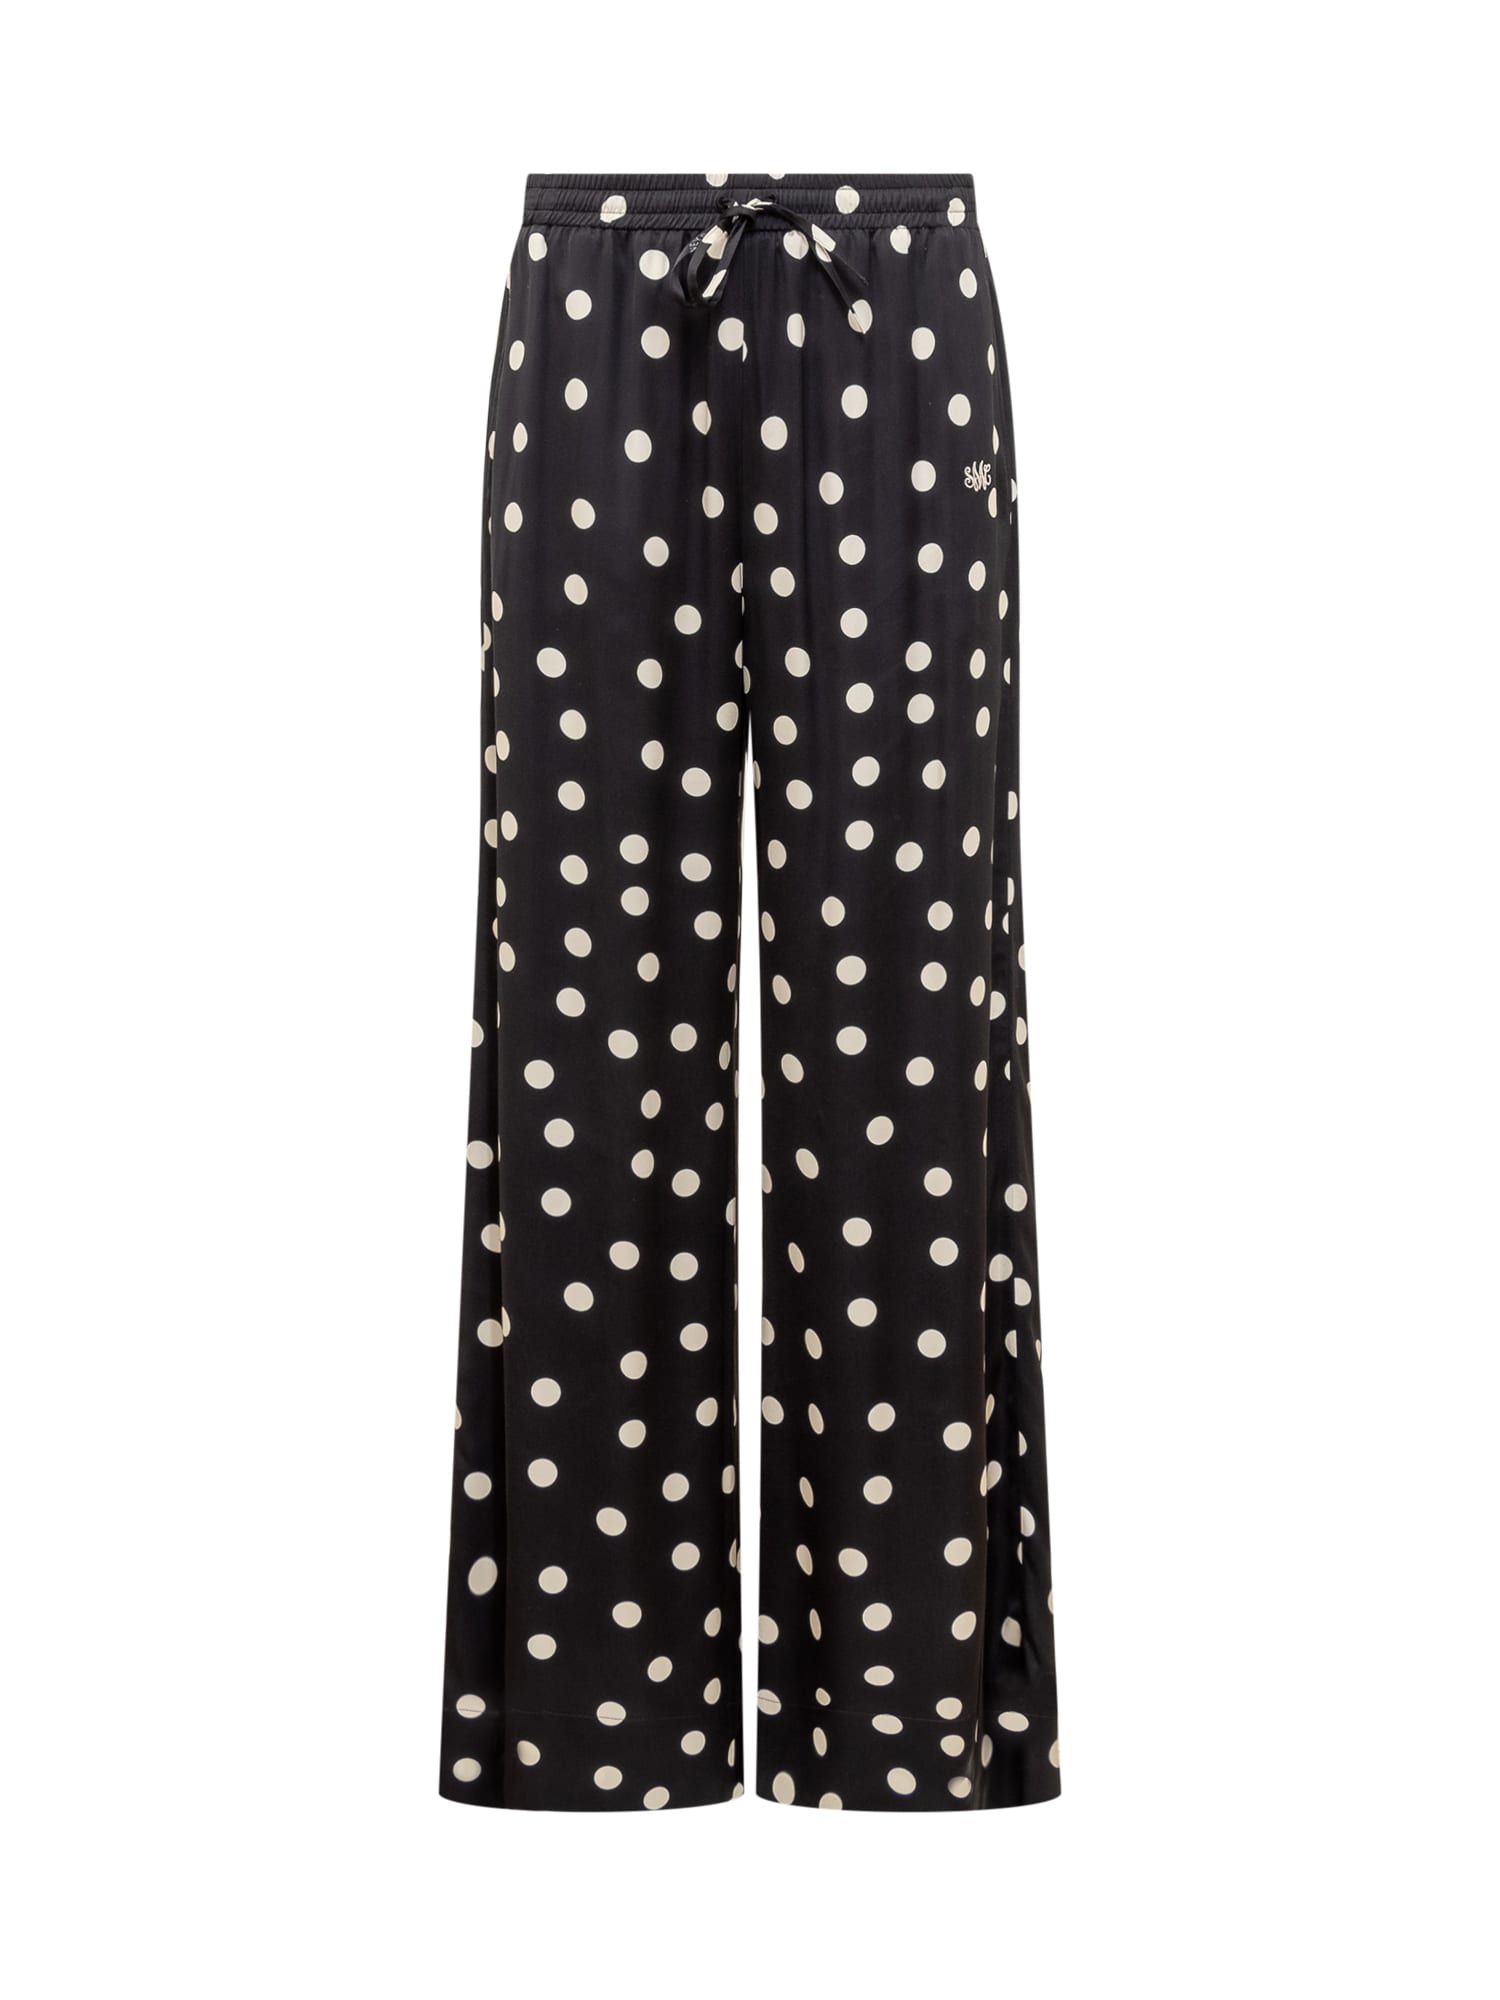 Stella Mccartney Trousers With Polka Dot Pattern In Black/cream